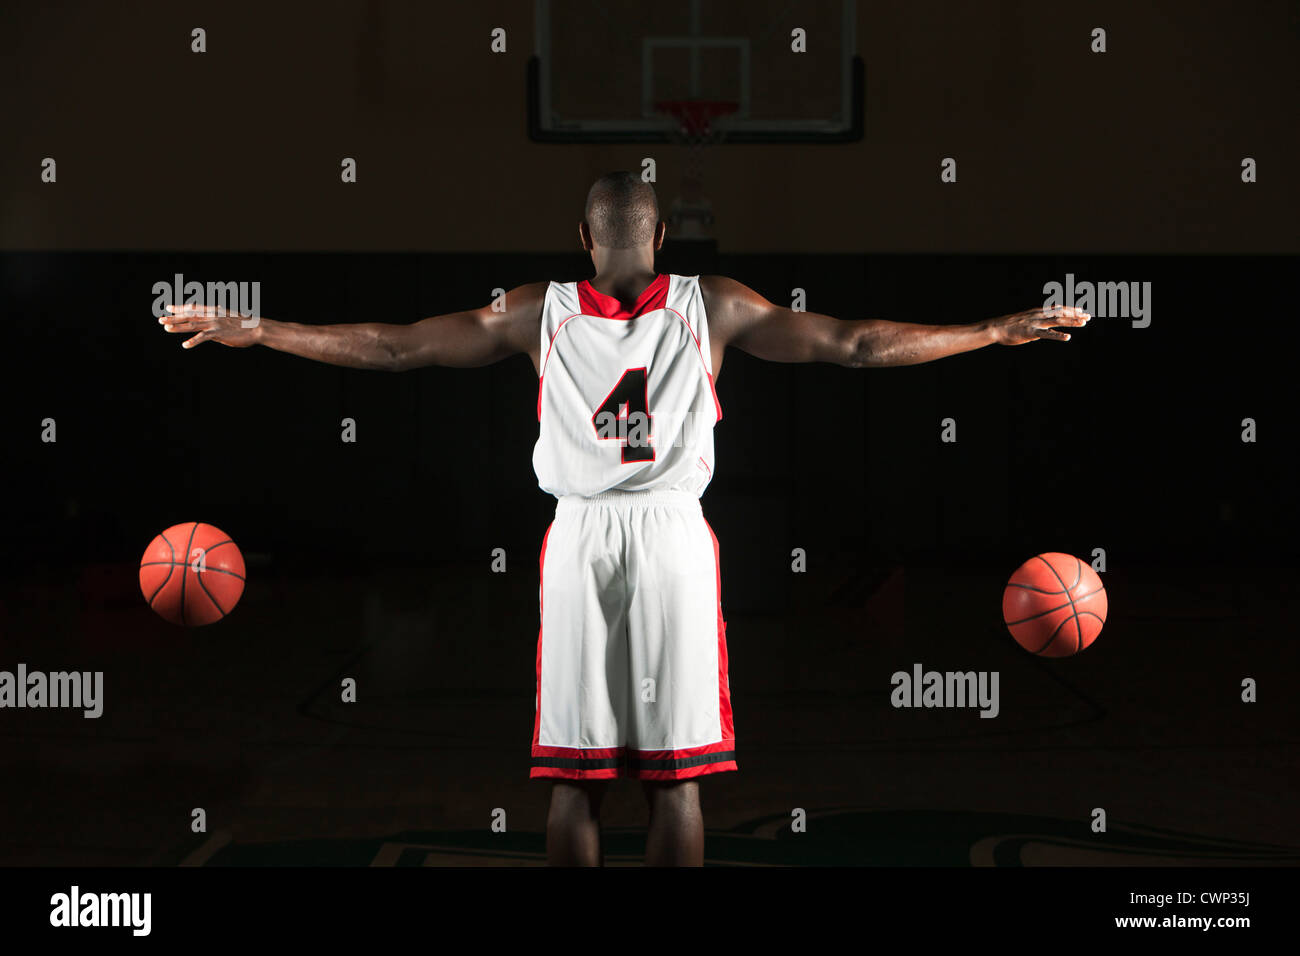 Basketball player dribbling two balls Stock Photo